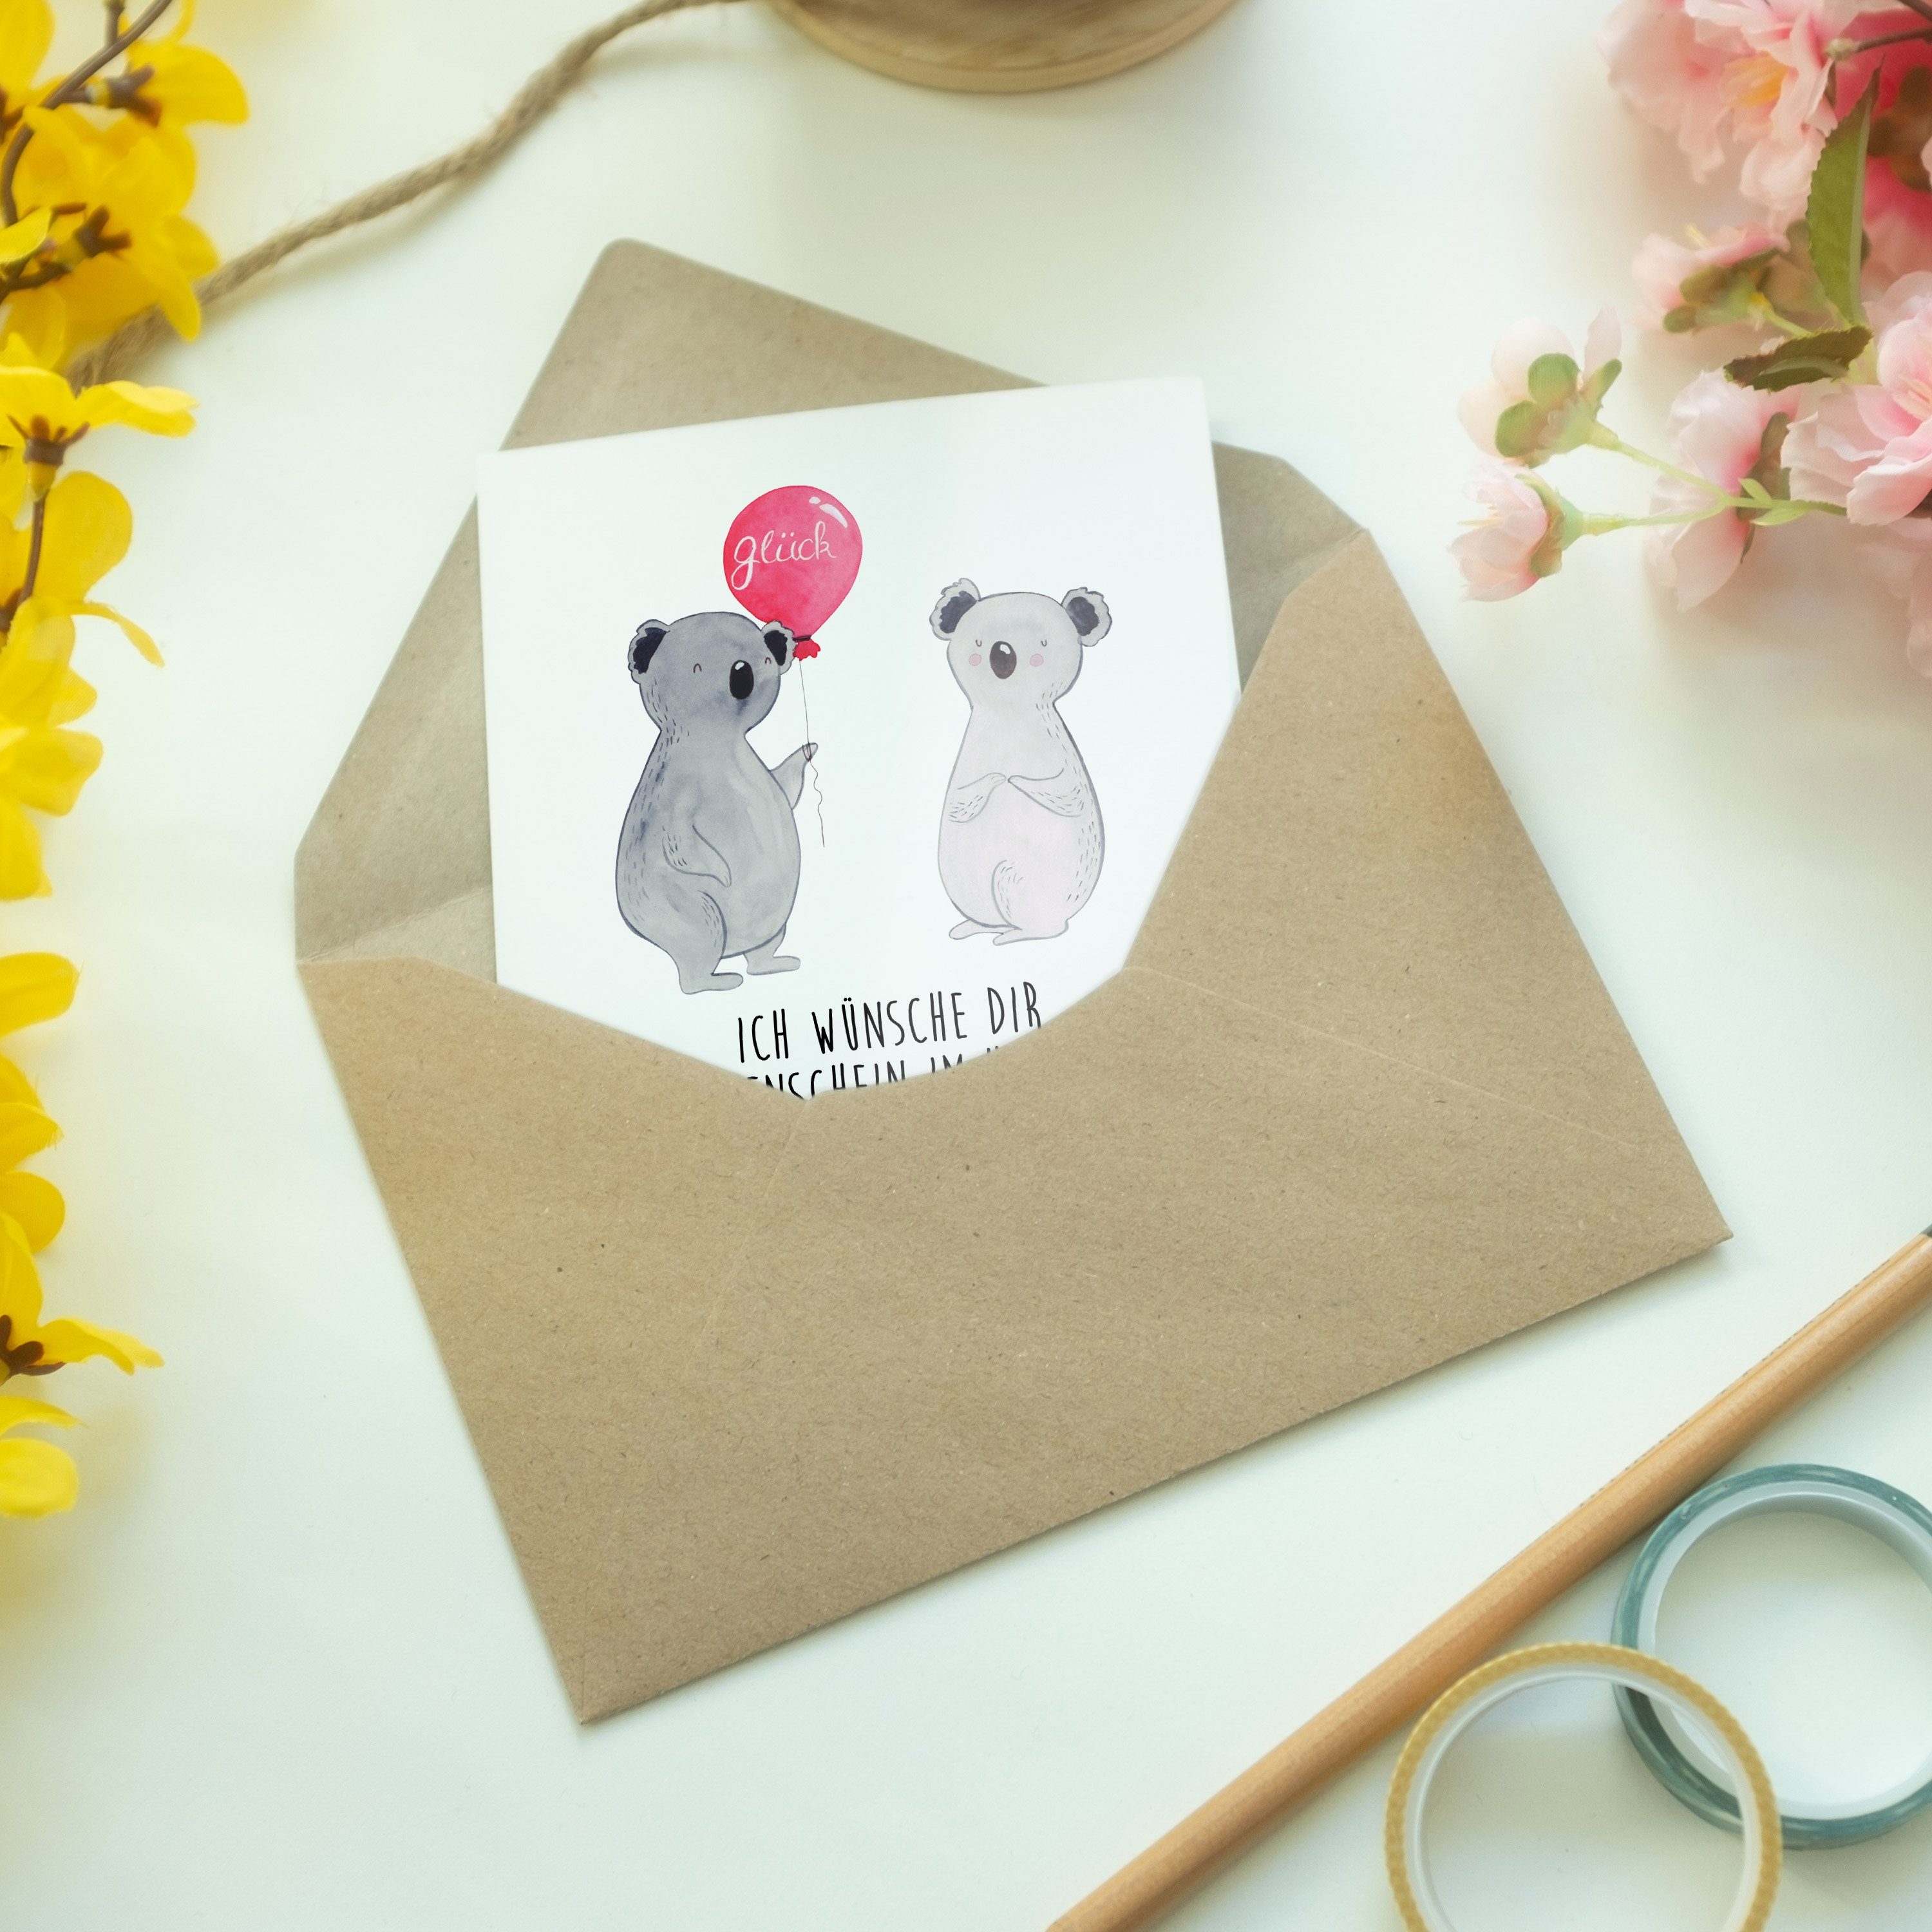 Koala Luftballon Mr. - Mrs. Weiß Panda Geburtstagskarte, Grußkarte Geschenk, Klappkarte, - & Hoc